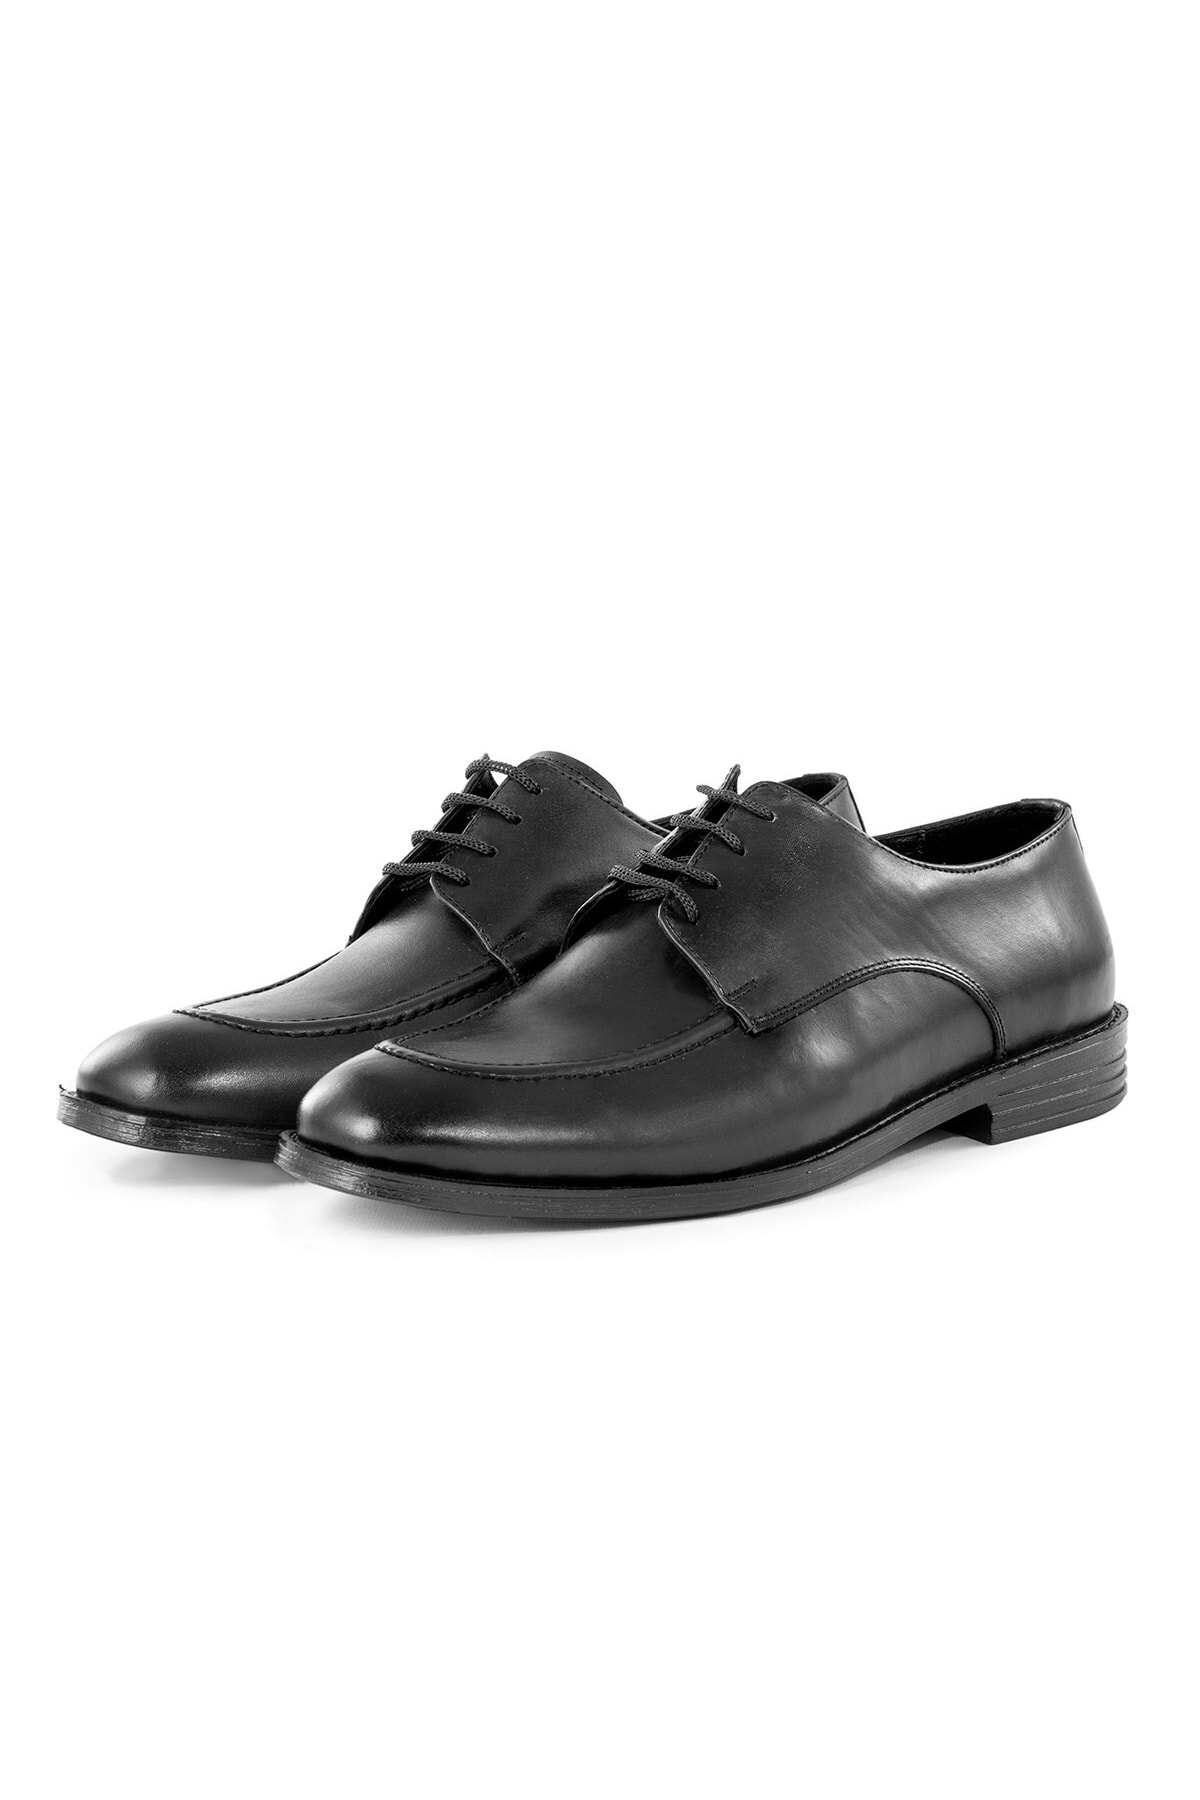 Levně Ducavelli Tira Genuine Leather Men's Classic Shoes, Derby Classic Shoes, Lace-Up Classic Shoes.